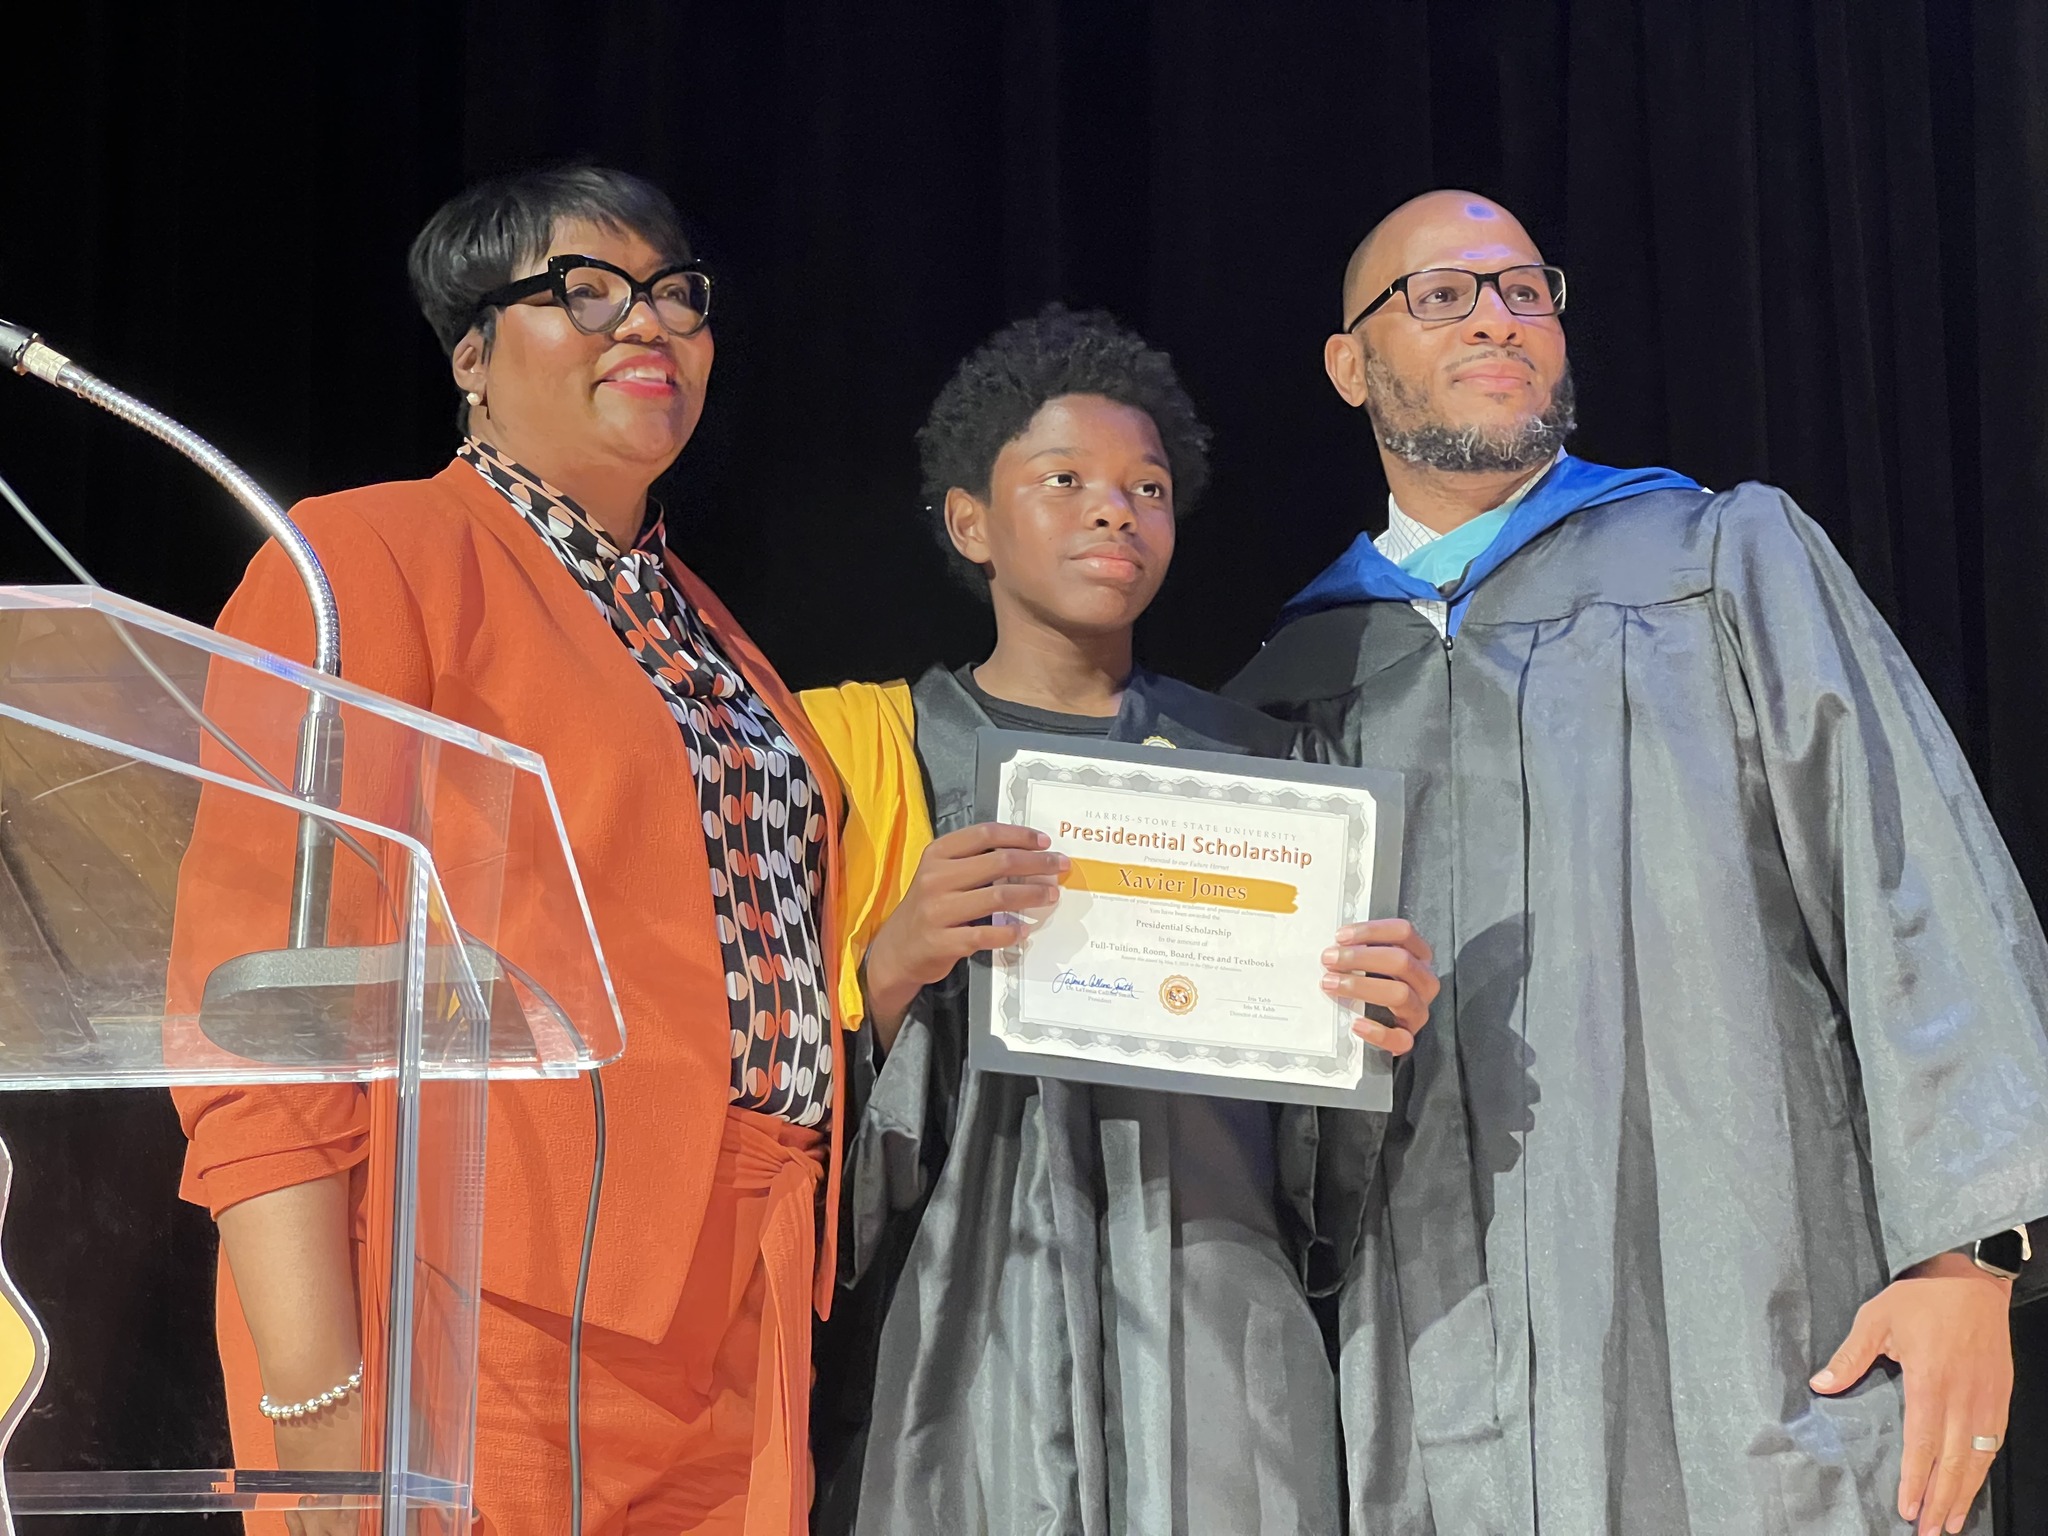 University President Offers 8th Grader FullRide Scholarship After He